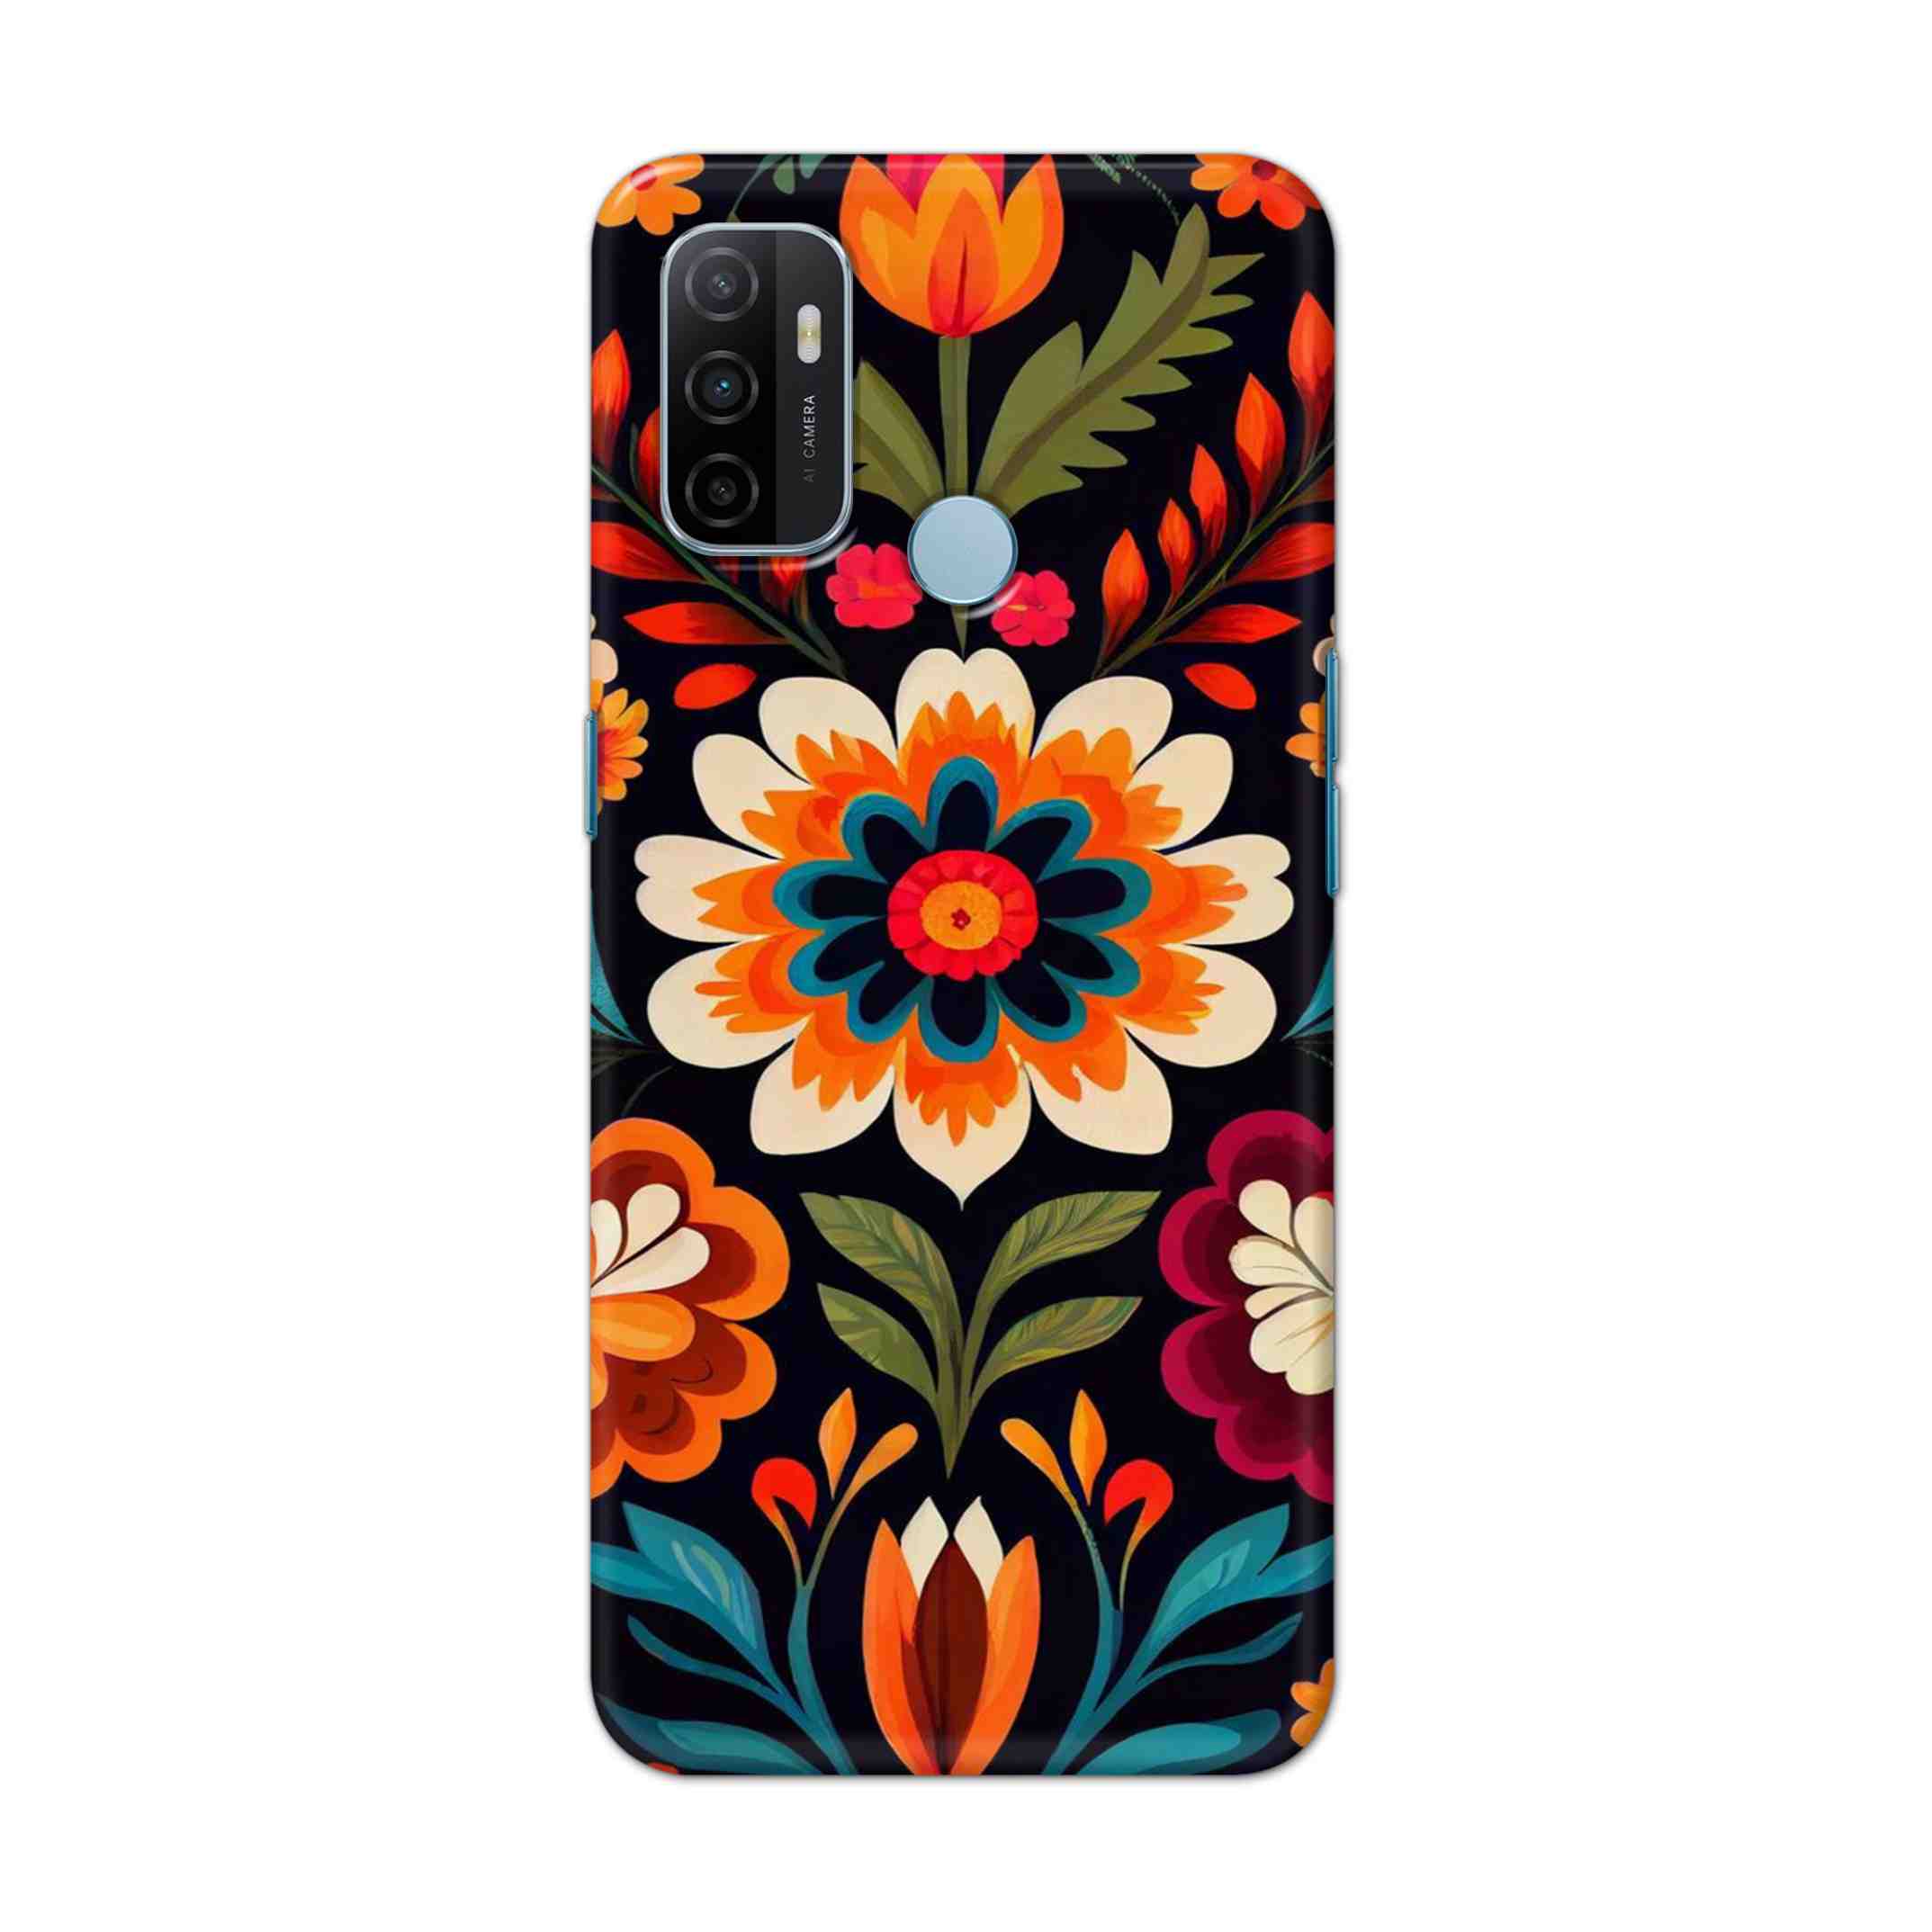 Buy Flower Hard Back Mobile Phone Case Cover For OPPO A53 (2020) Online